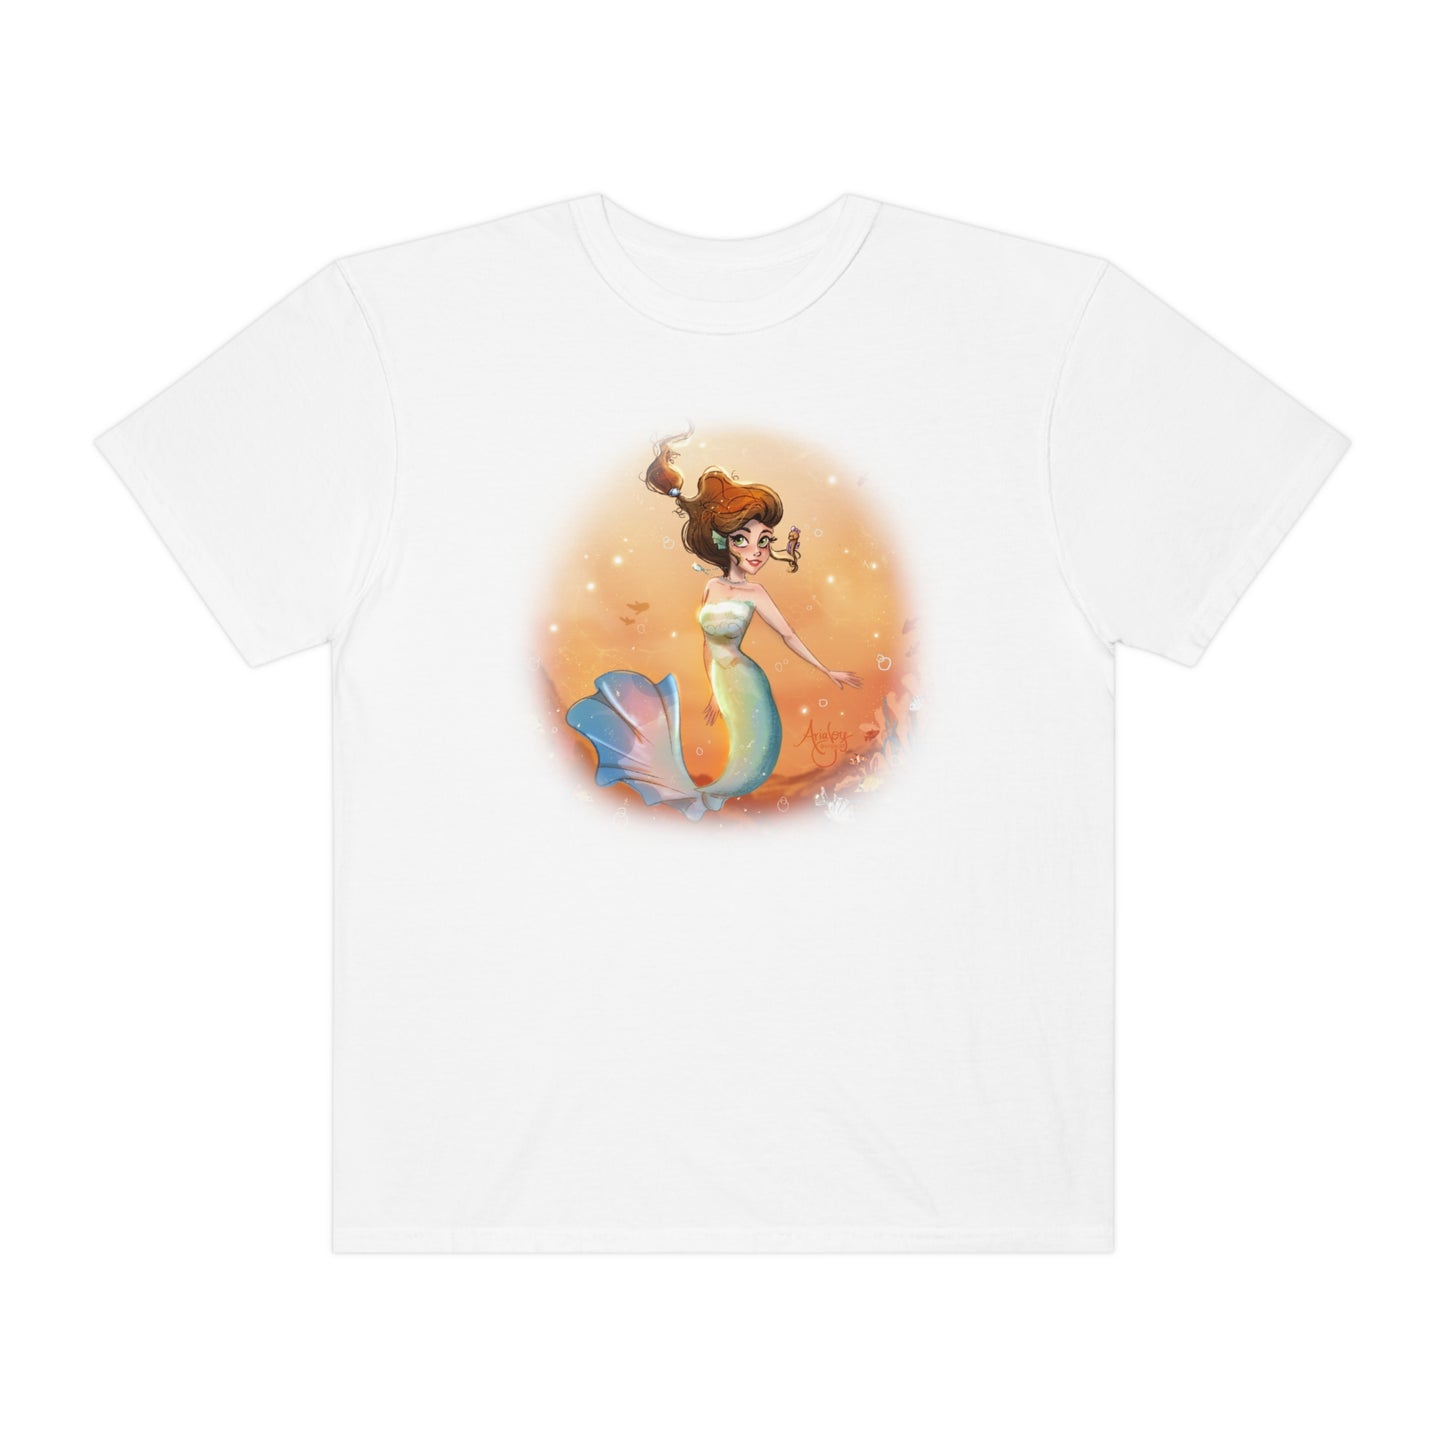 Coral's Classic Charm Mermaid T-shirt